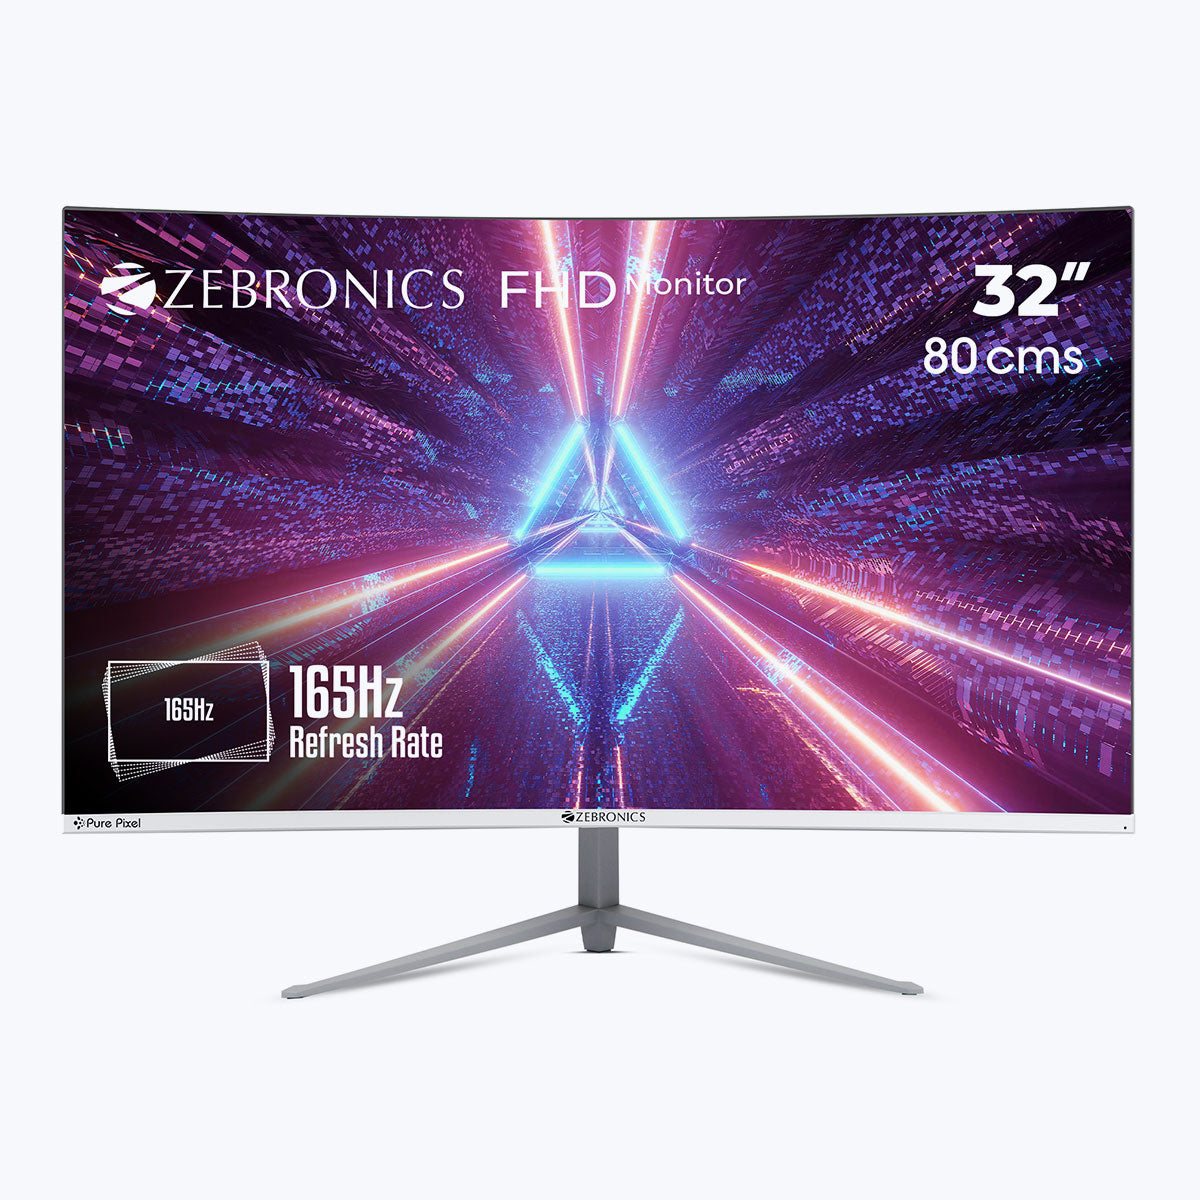 ZEB-AC32FHD LED (165Hz) - Gaming Monitor - Zebronics